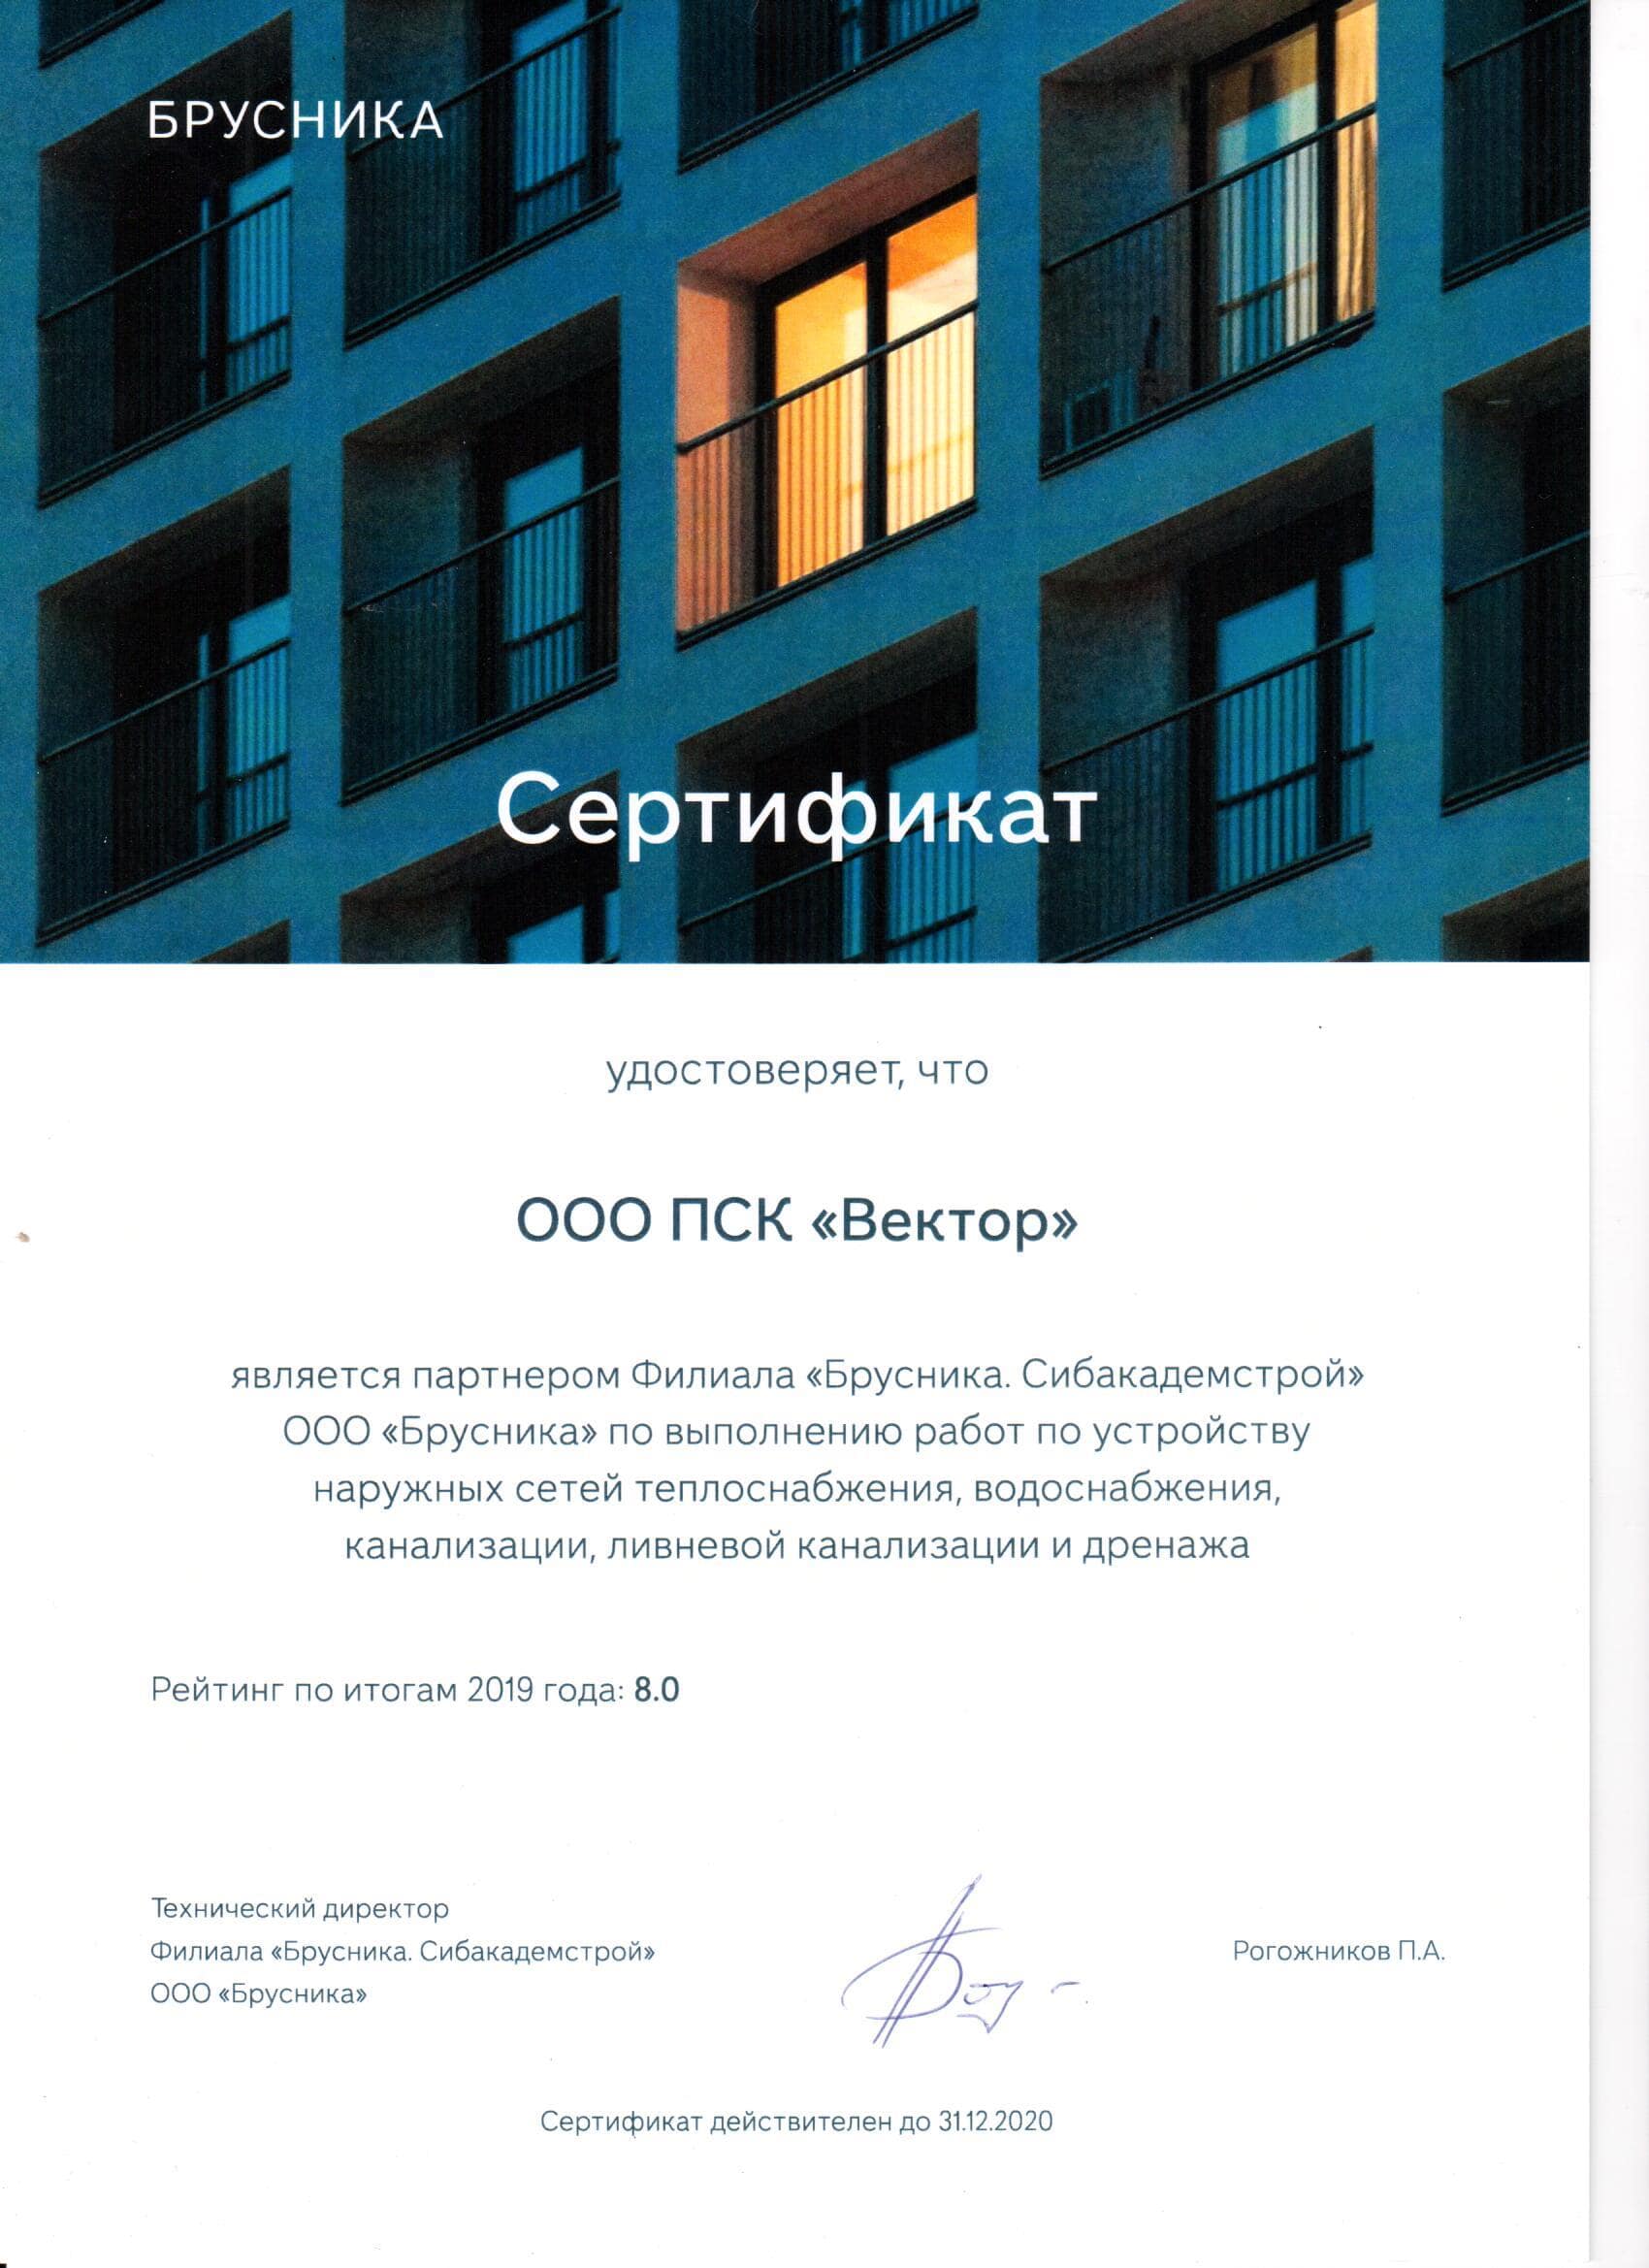 Сертификат от ООО «Брусника»